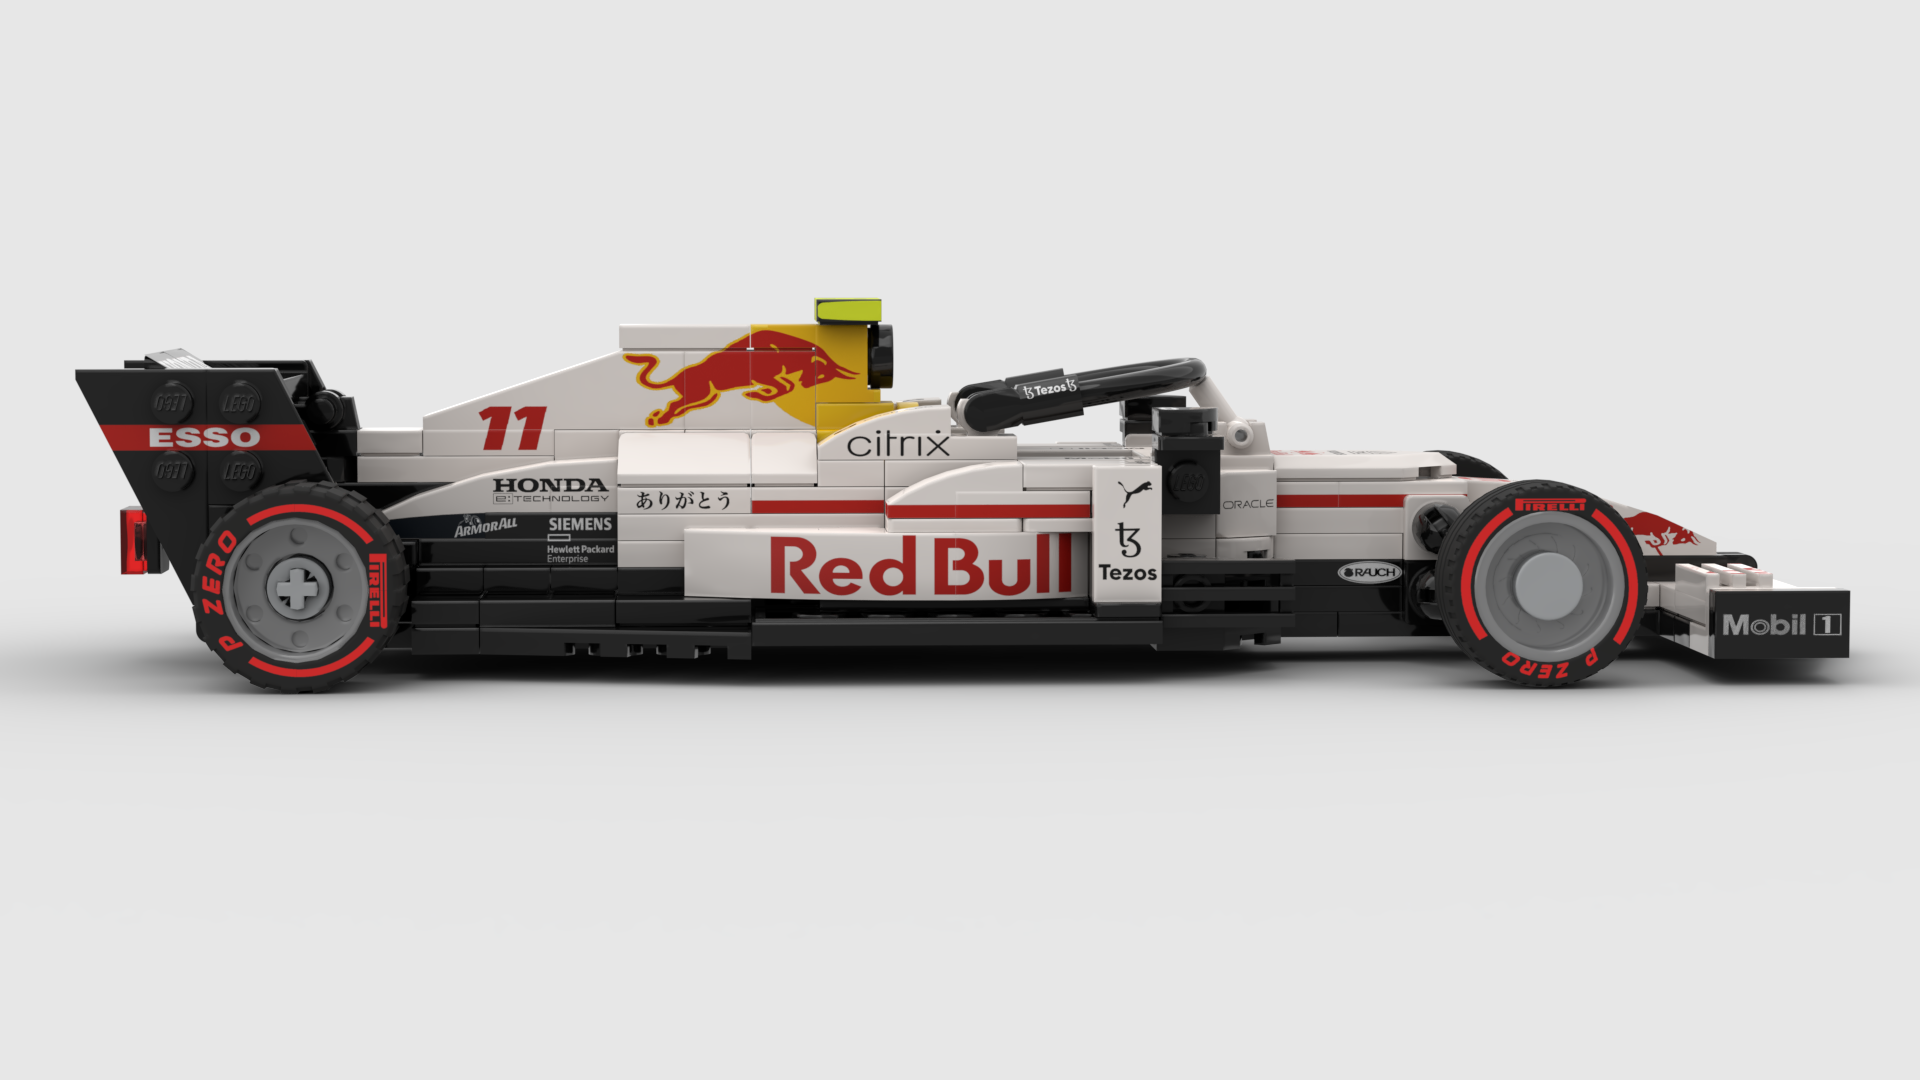 Oracle Red Bull Racing - The White Bull - Honda Livery - Turkish Grand Prix  - 2021 Art Print